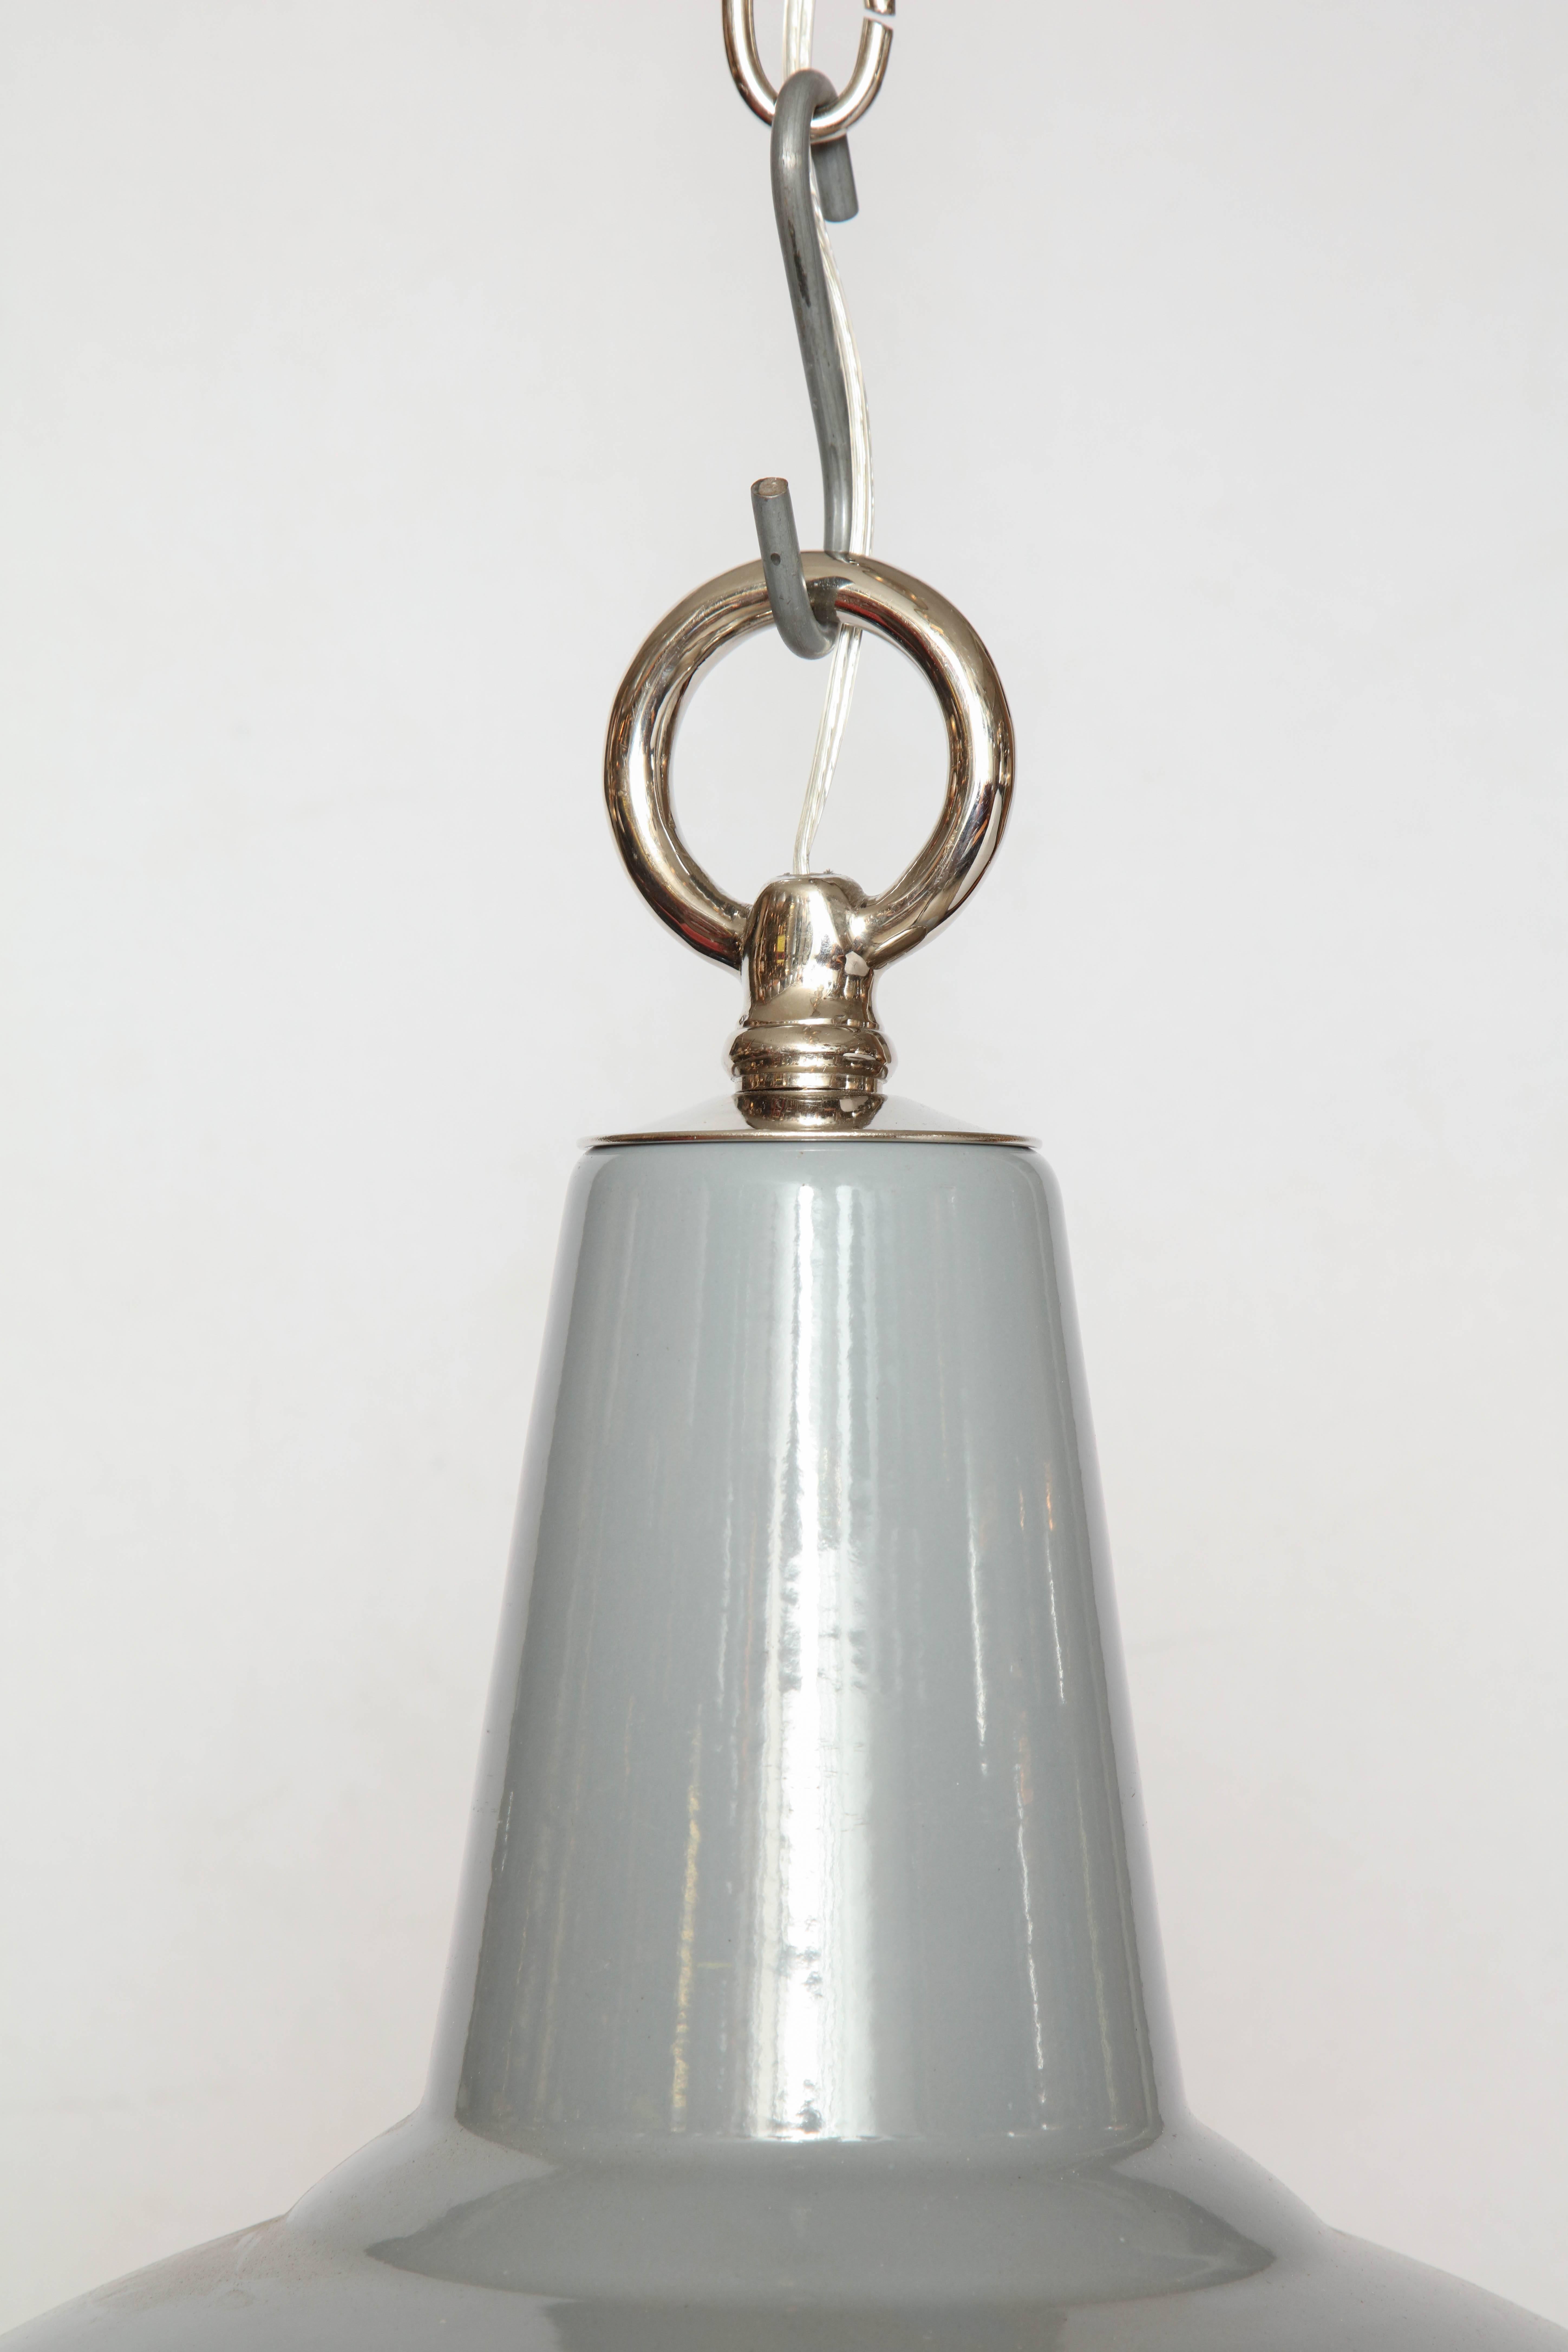 Vintage Benjamin Light with Diffuser 2